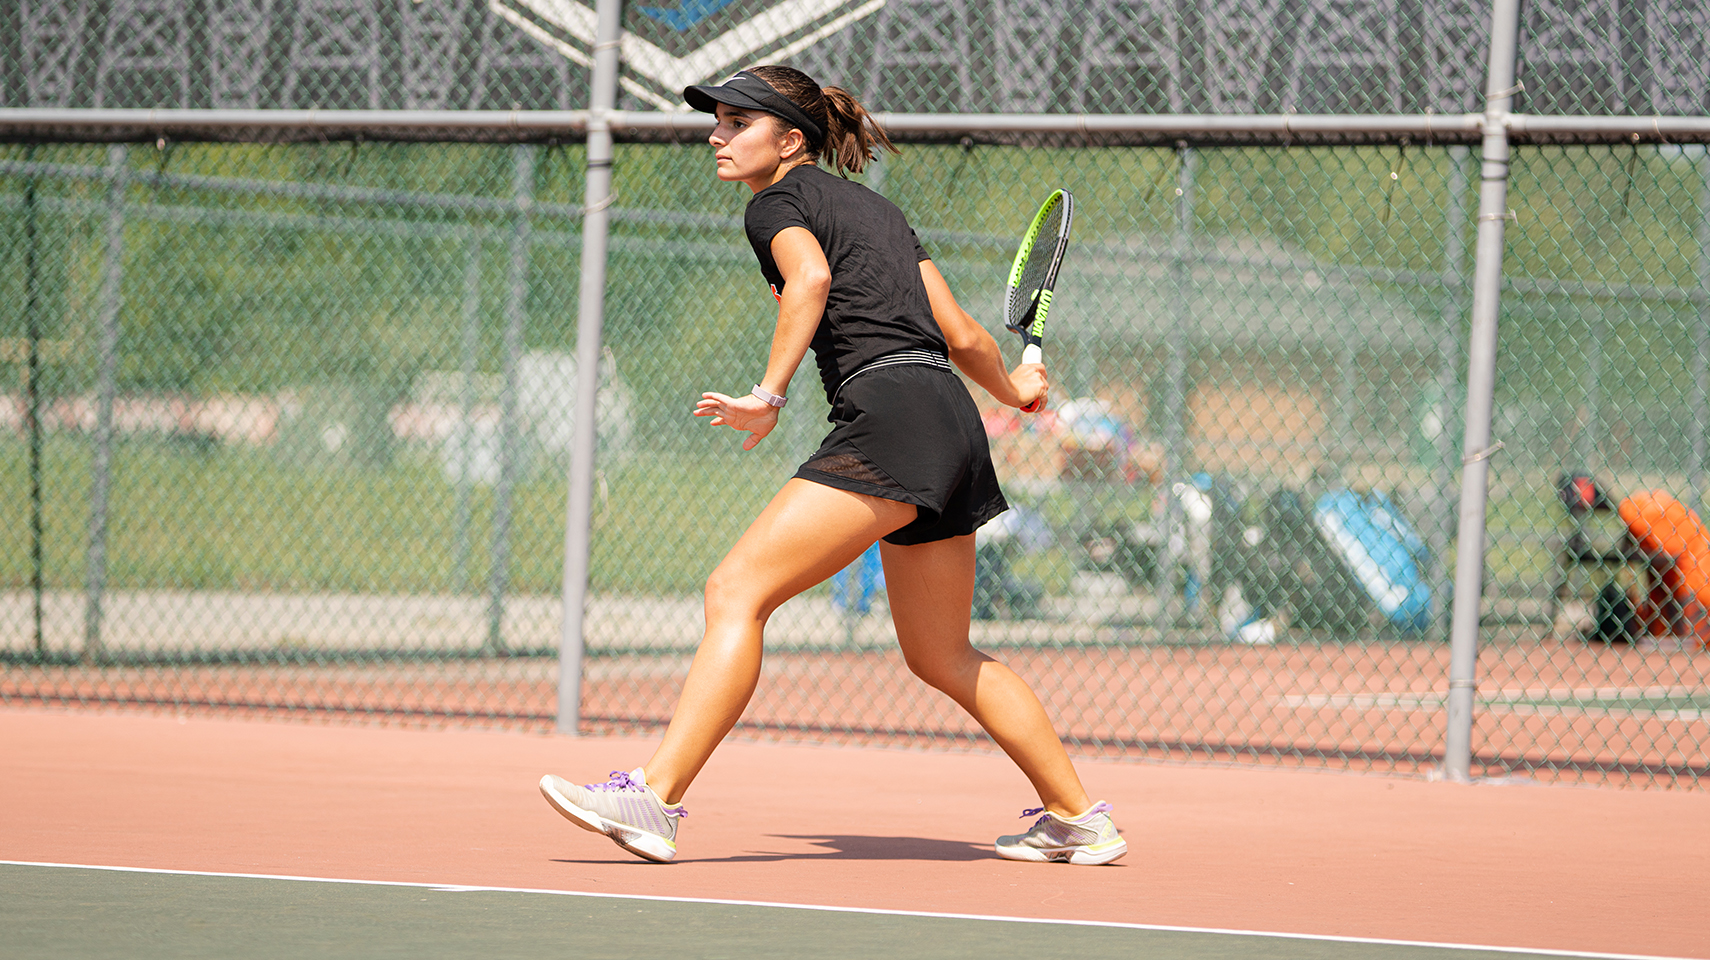 Women's tennis player hitting the ball in the sunshine